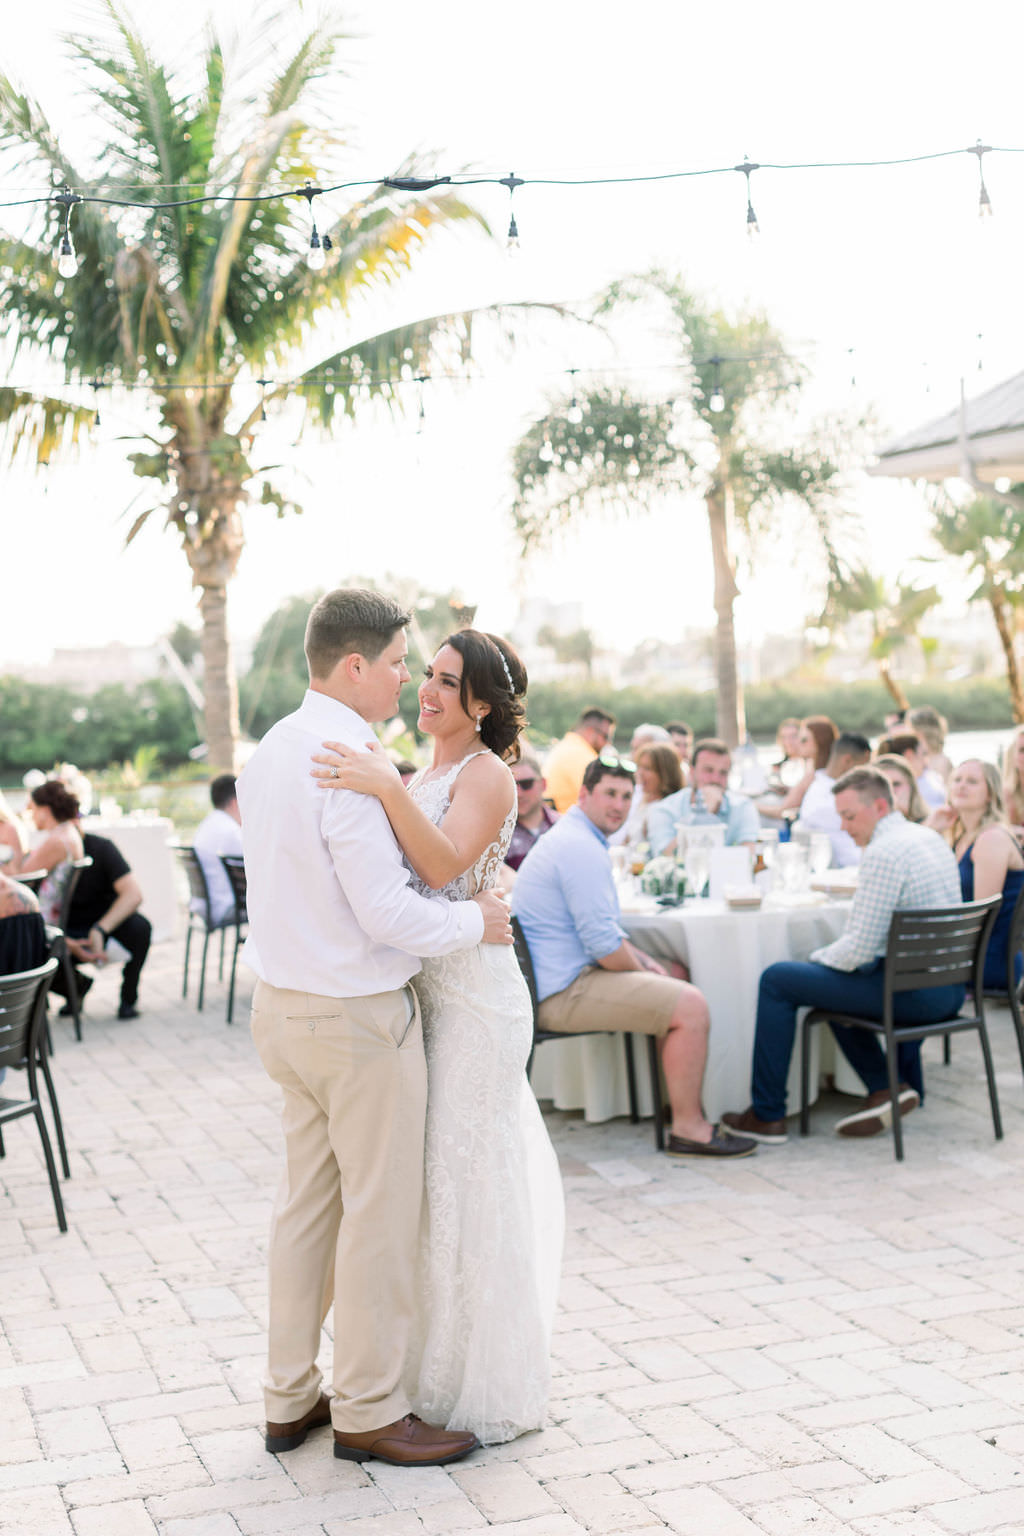 Clearwater Beach Bride and Groom First Dance Wedding Reception Portrait | Wedding Venue Island Way Grill